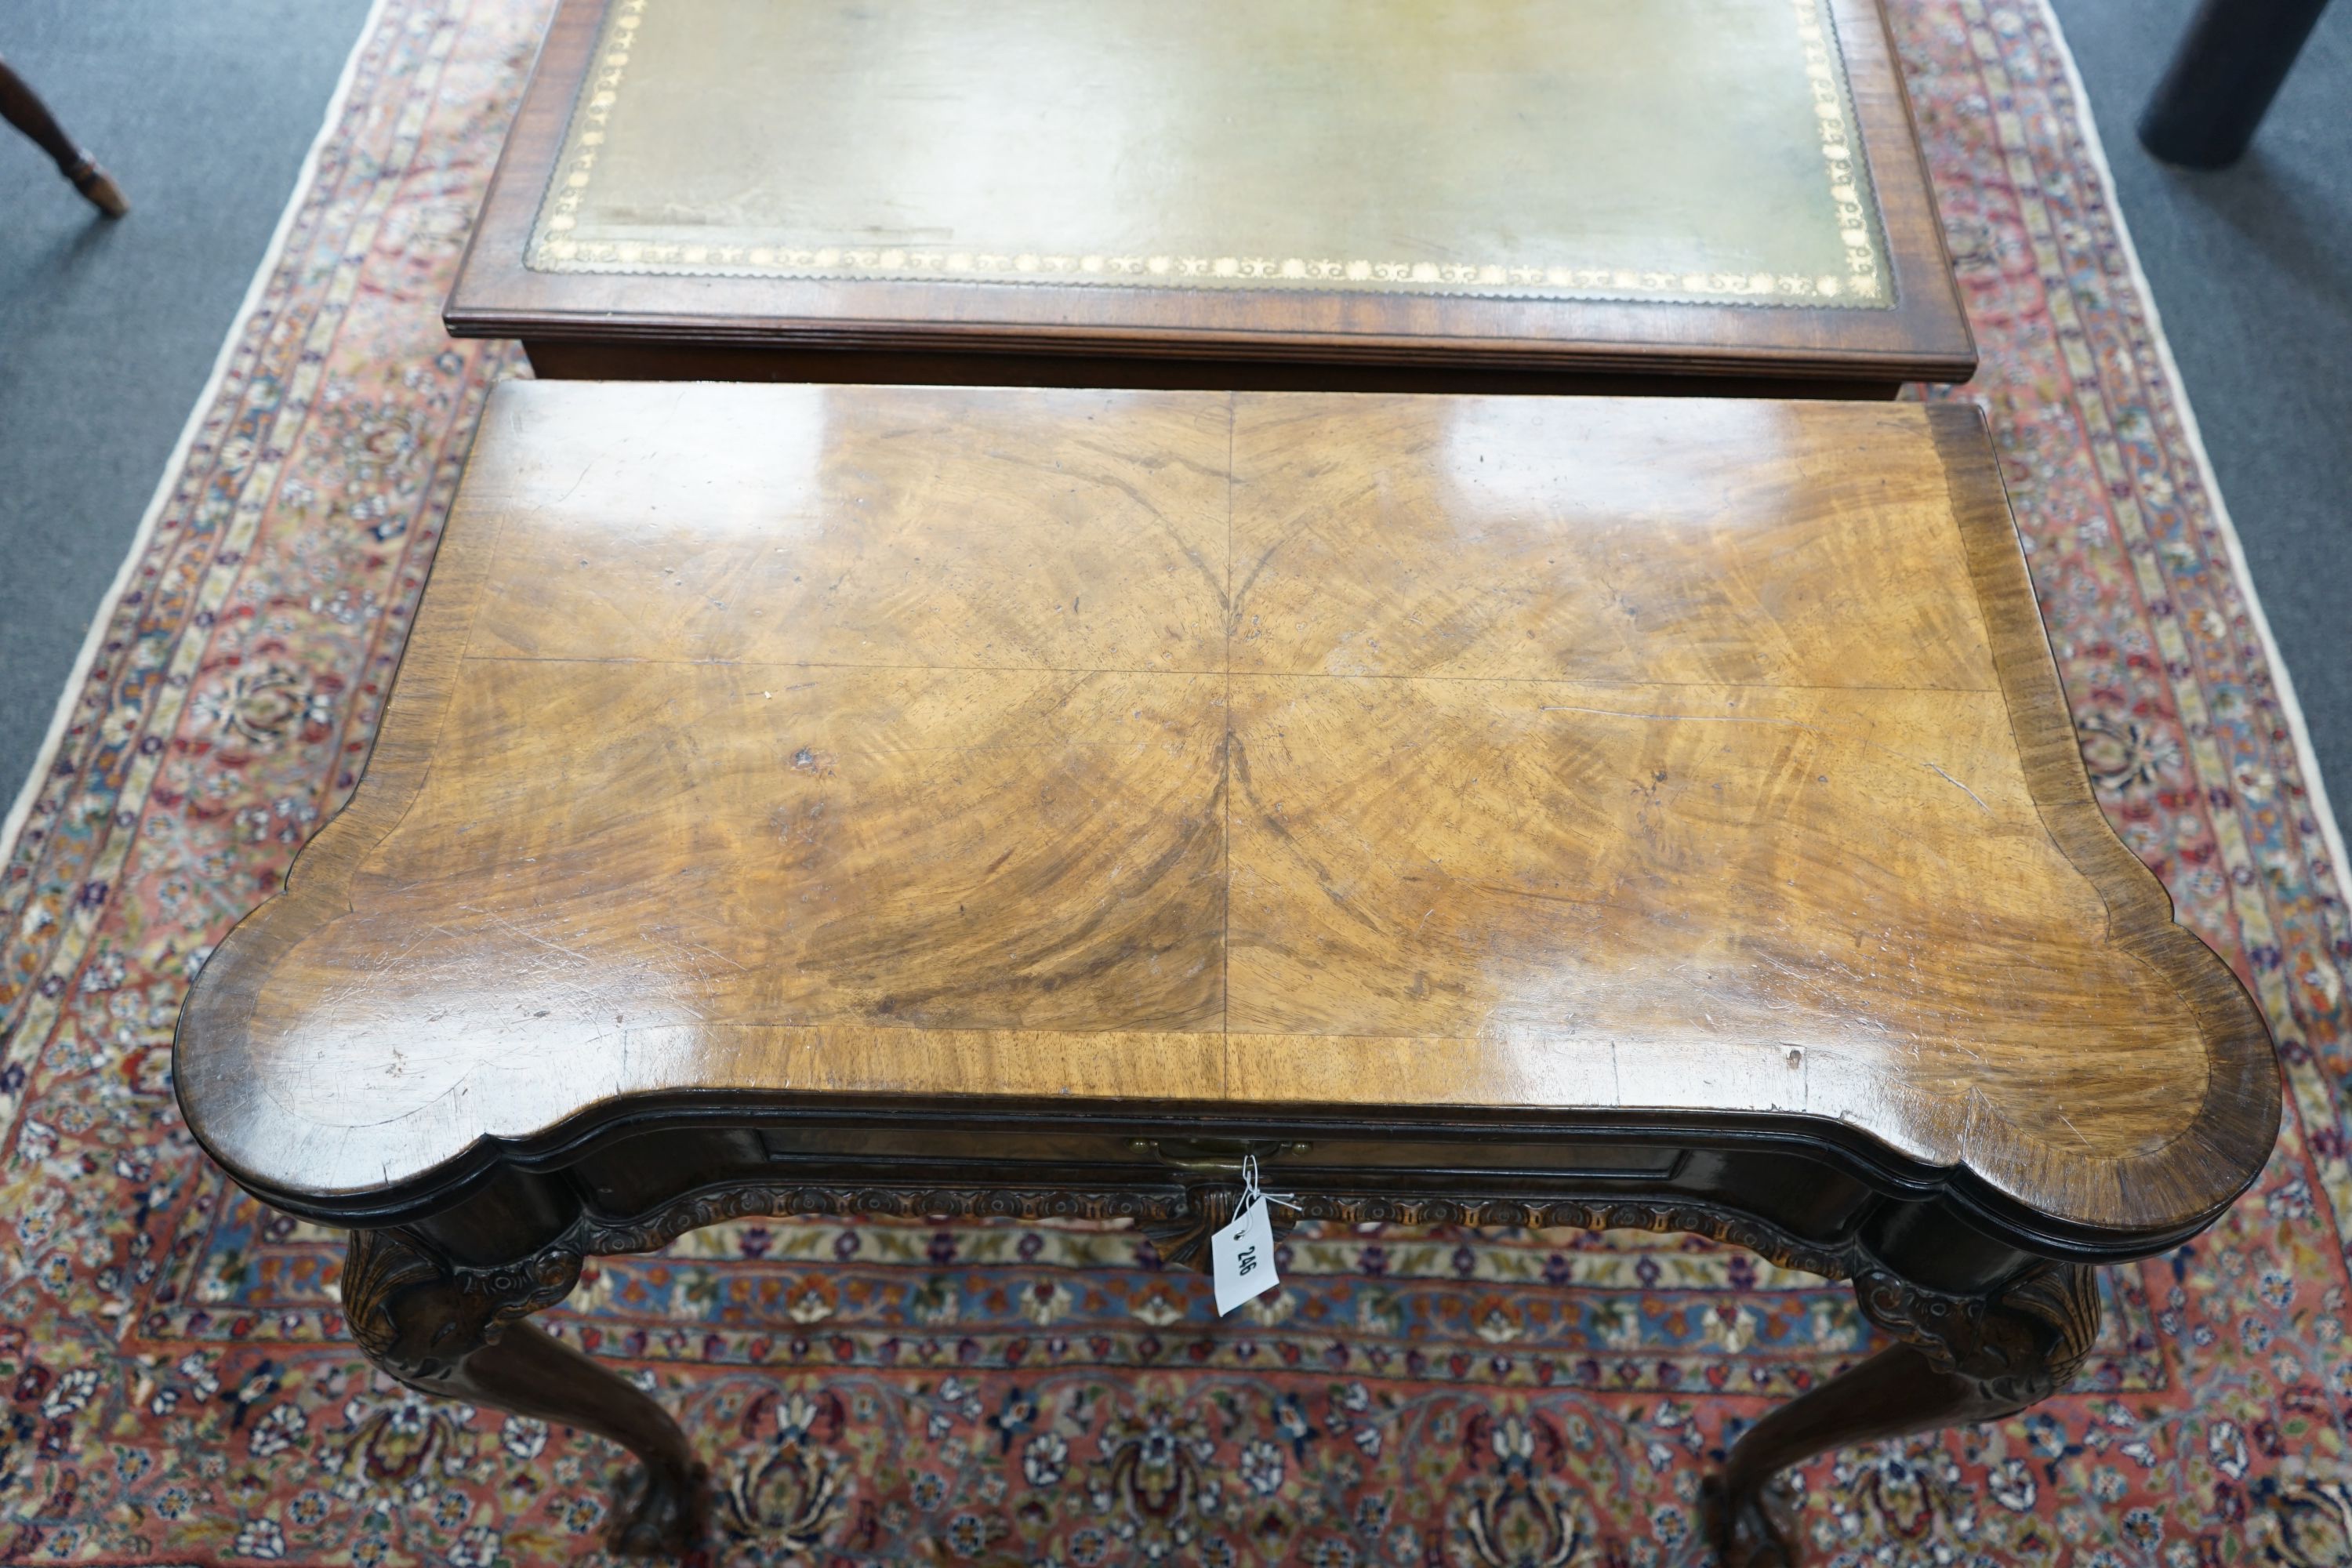 A George II revival walnut card table, width 88cm depth 45cm height 75cm